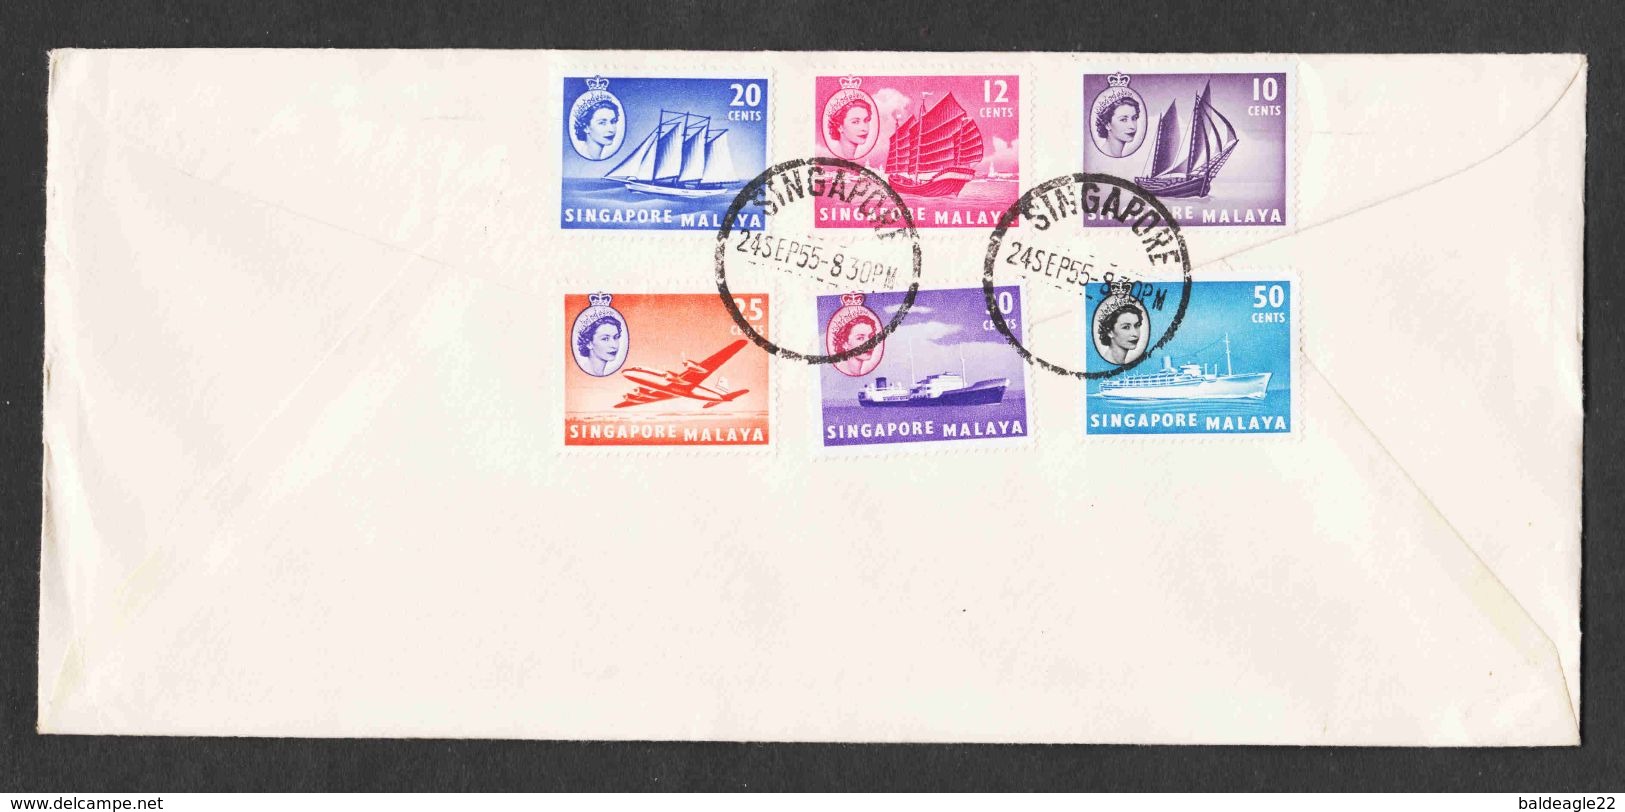 Singapore - Cover #1 Used - Singapore Stamp Club 1955 Exhibition - Singapore (...-1959)